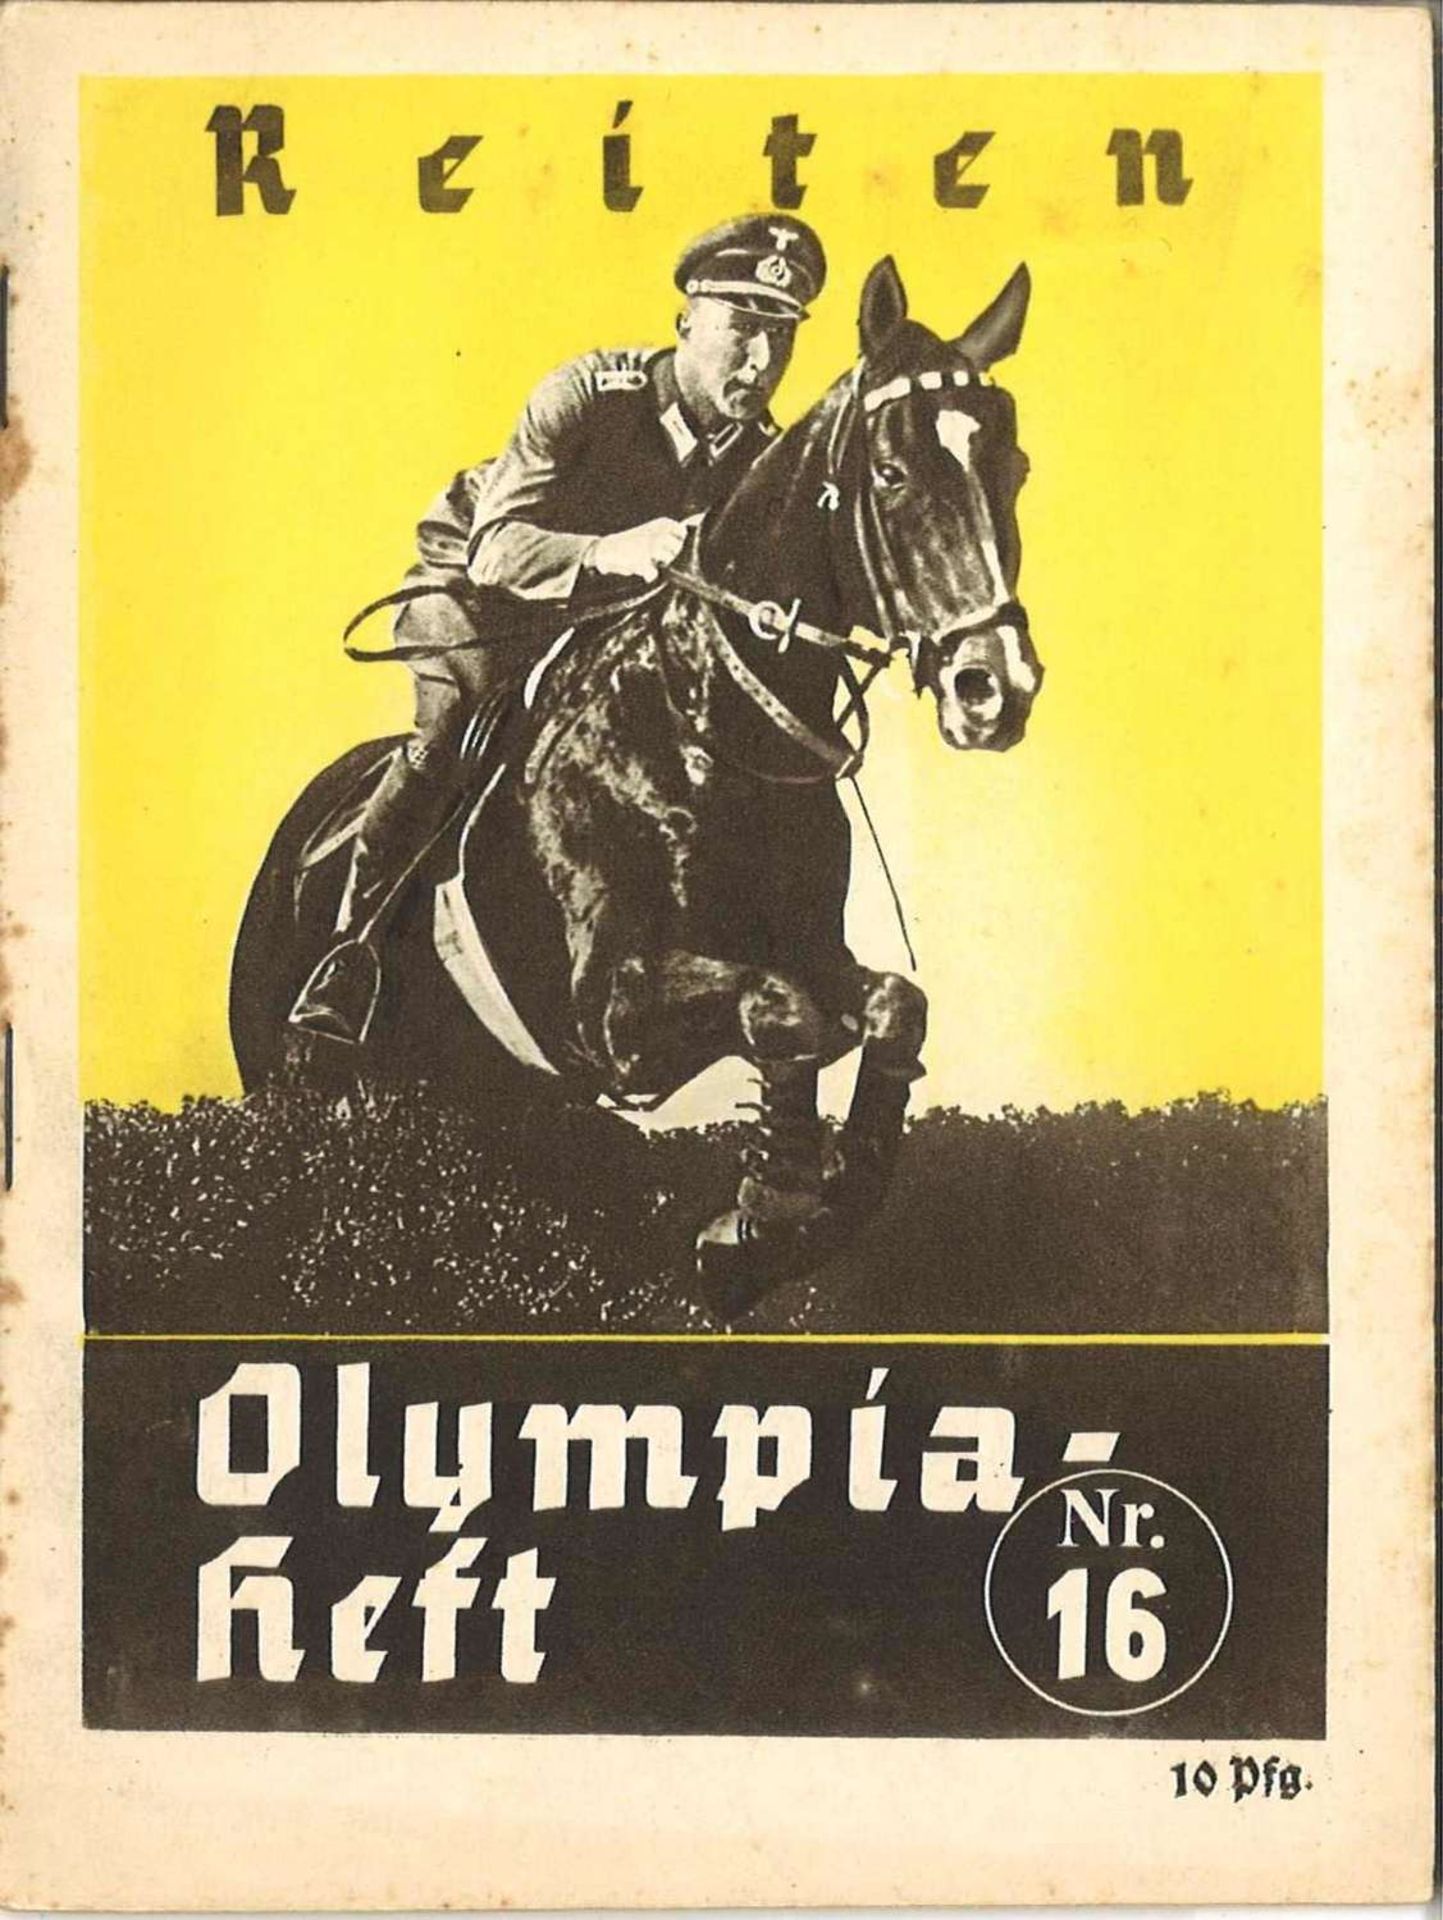 Berlin 1936, Olympia Heft, 32 Seiten, Reiten Nr. 16Berlin 1936, Olympia Heft, 32 pages, riding No.